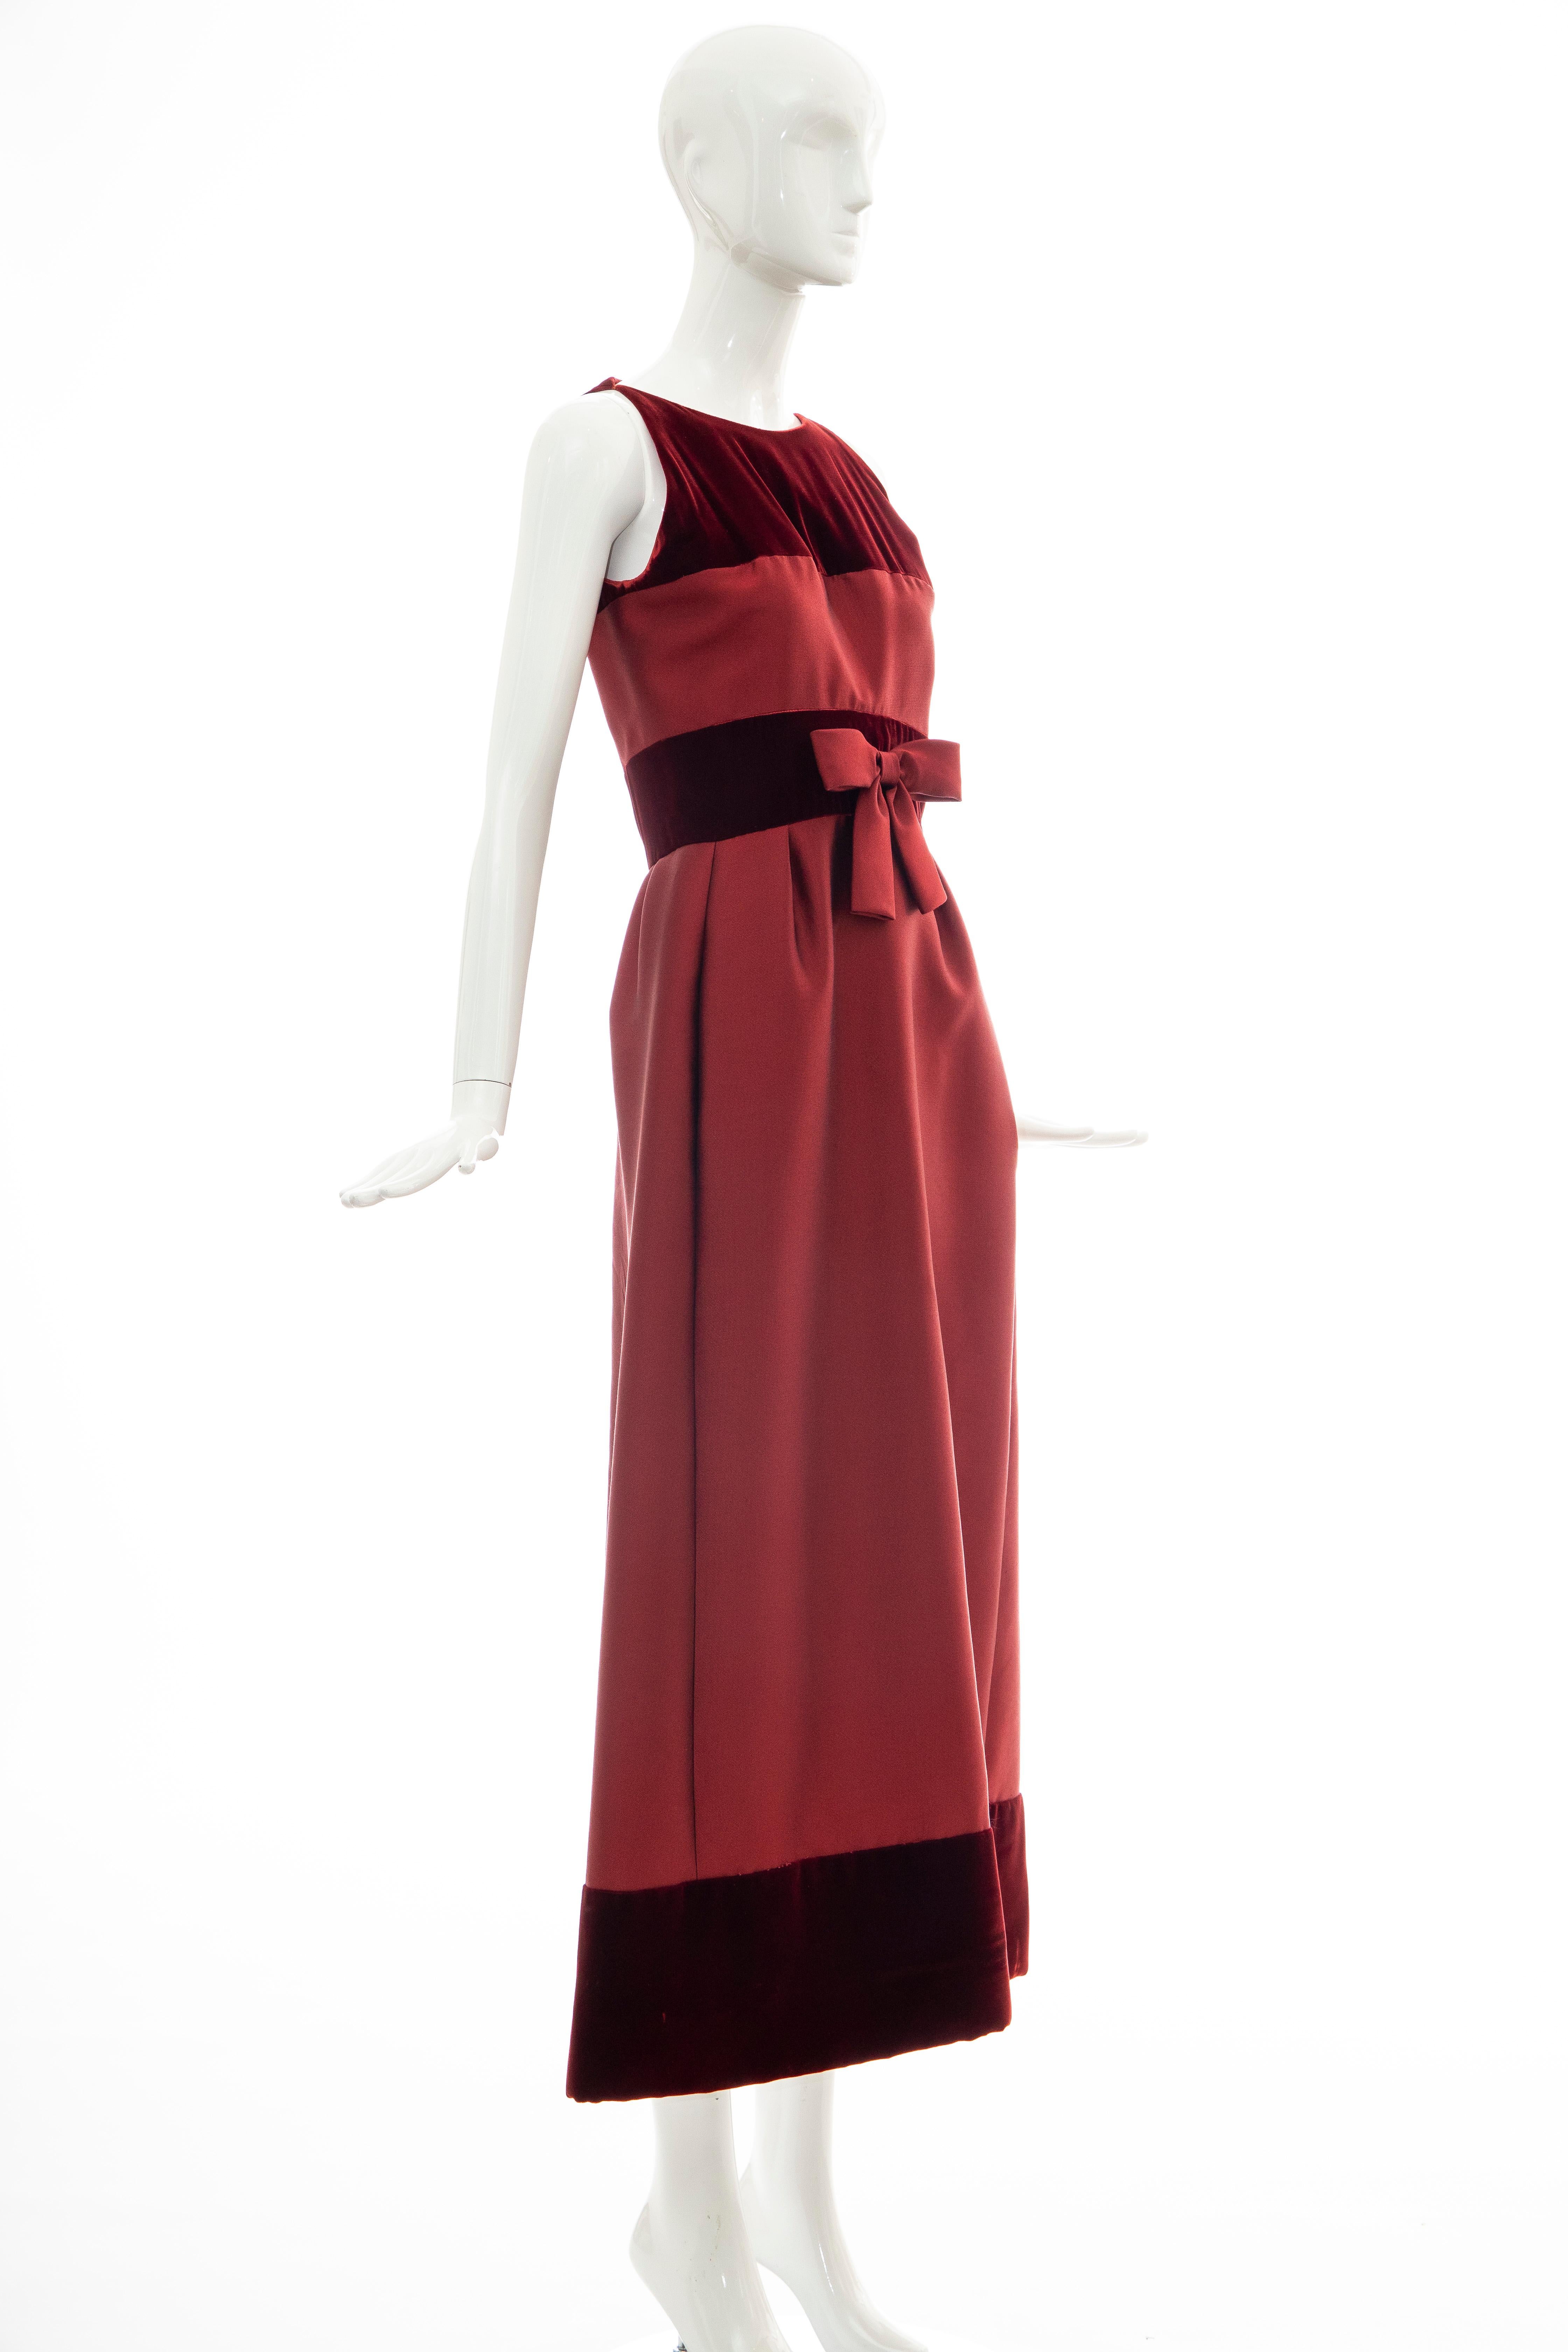 cranberry dress